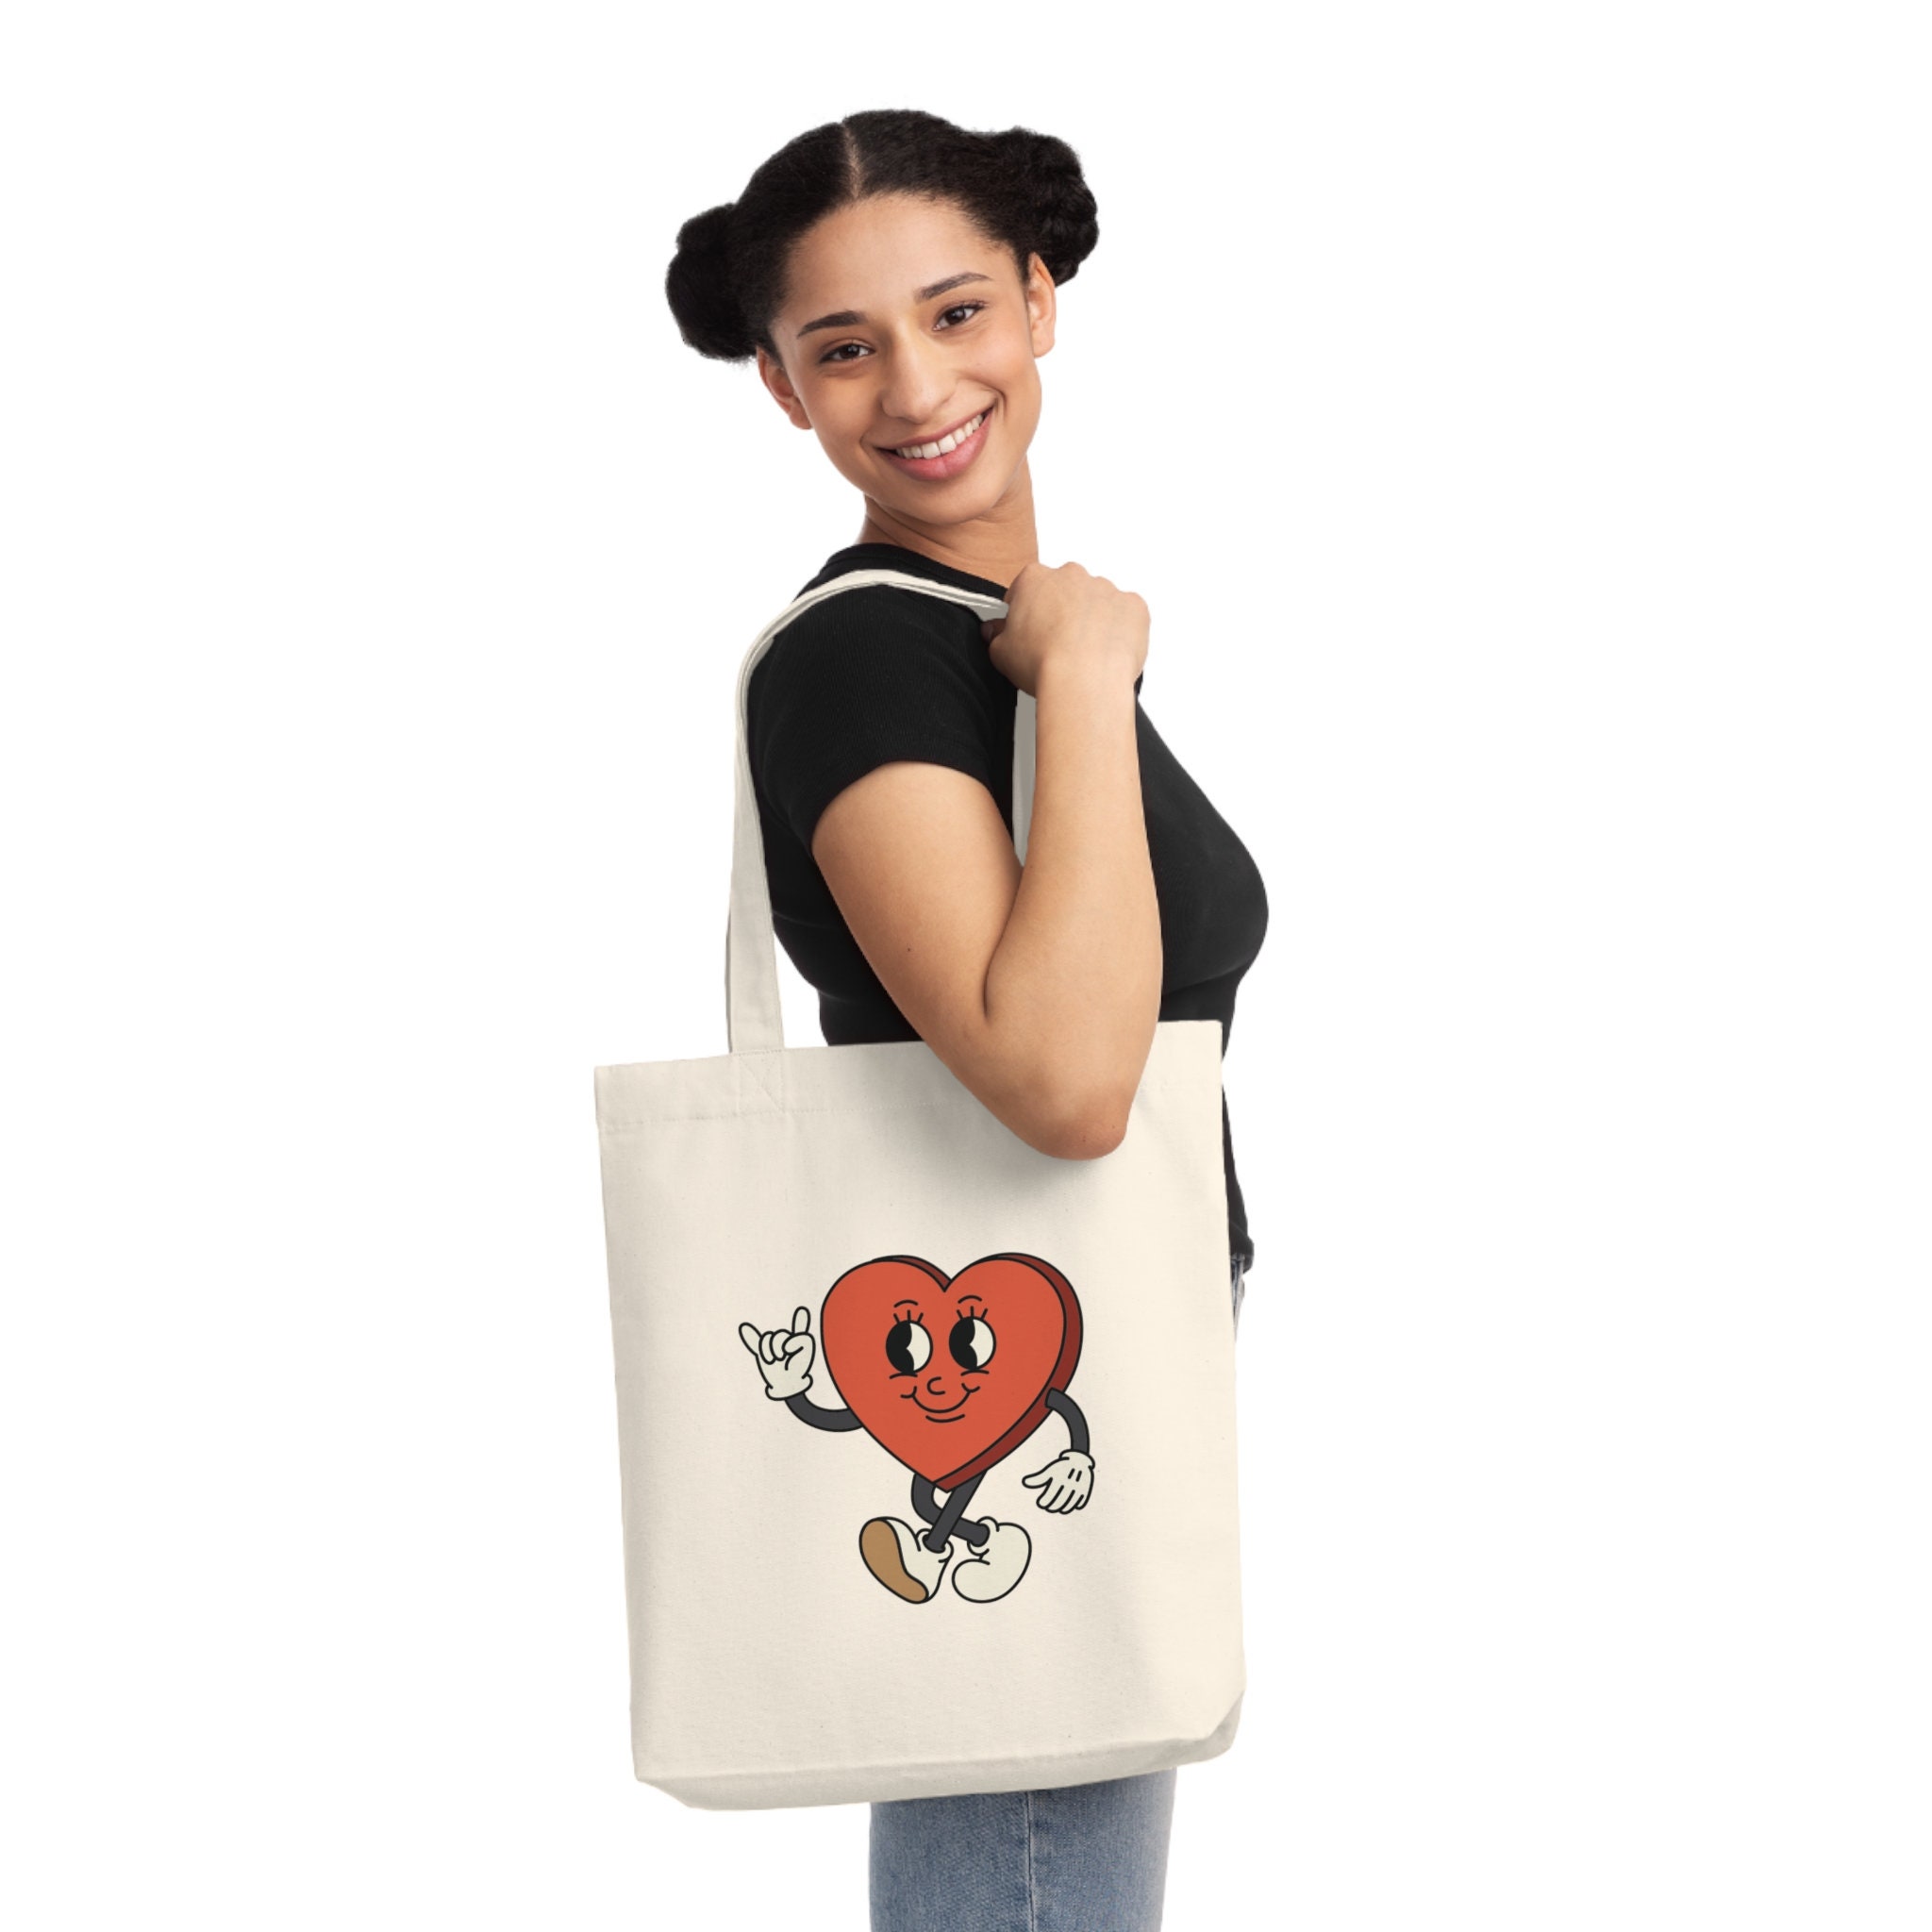 50 Pcs Shop Bags, Hand Plastic Bags, , Gift Bag Jewelry Bags